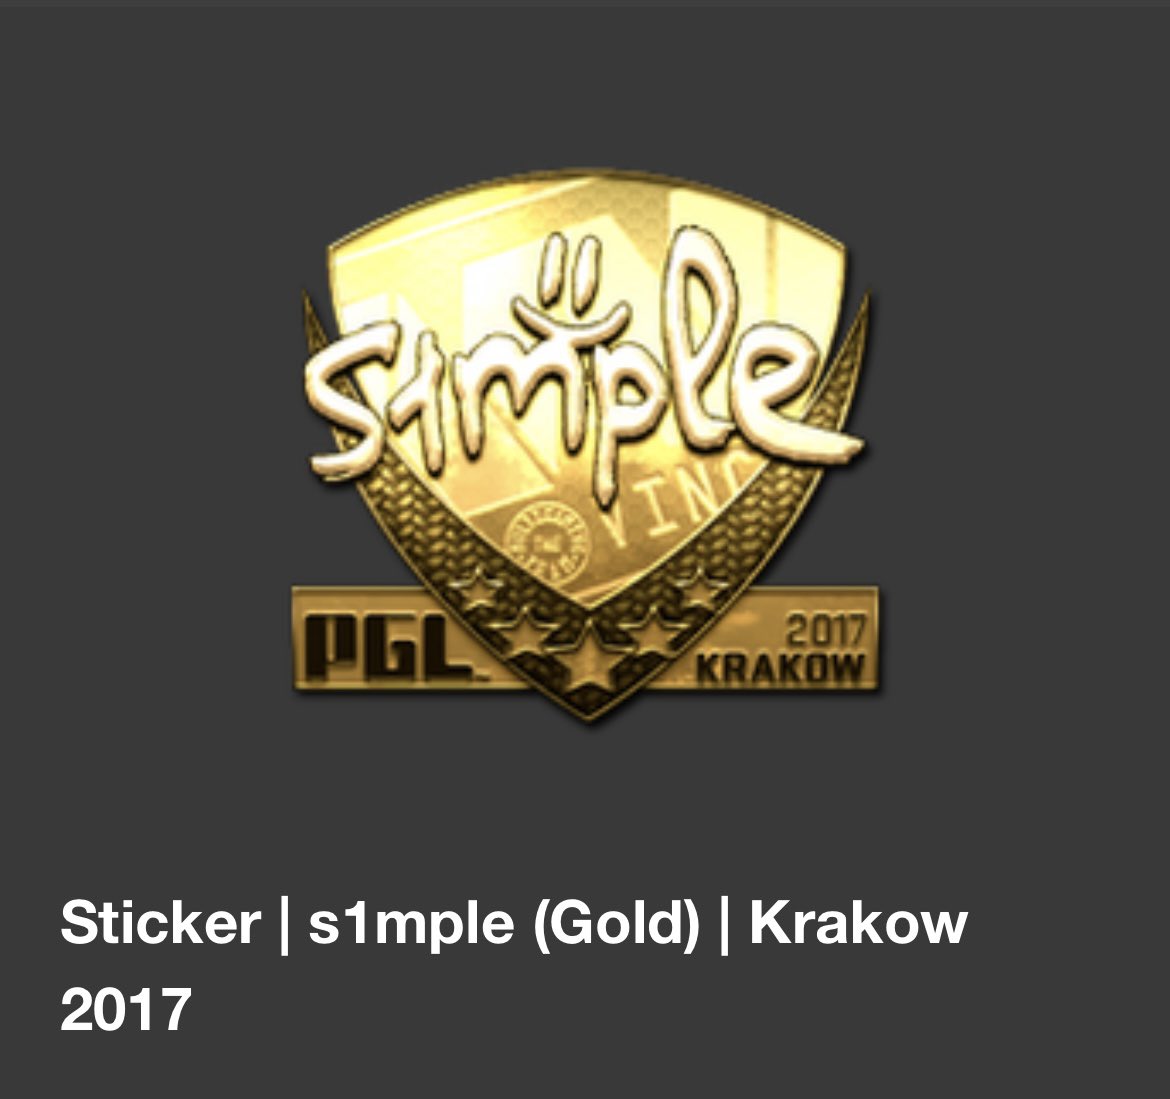 Gold 2017. Gold Sticker Zeus Krakow 2017. S1mple Gold Sticker. Krakow 2017 North Gold. Gold Sticker Electronic Krakow 2017.